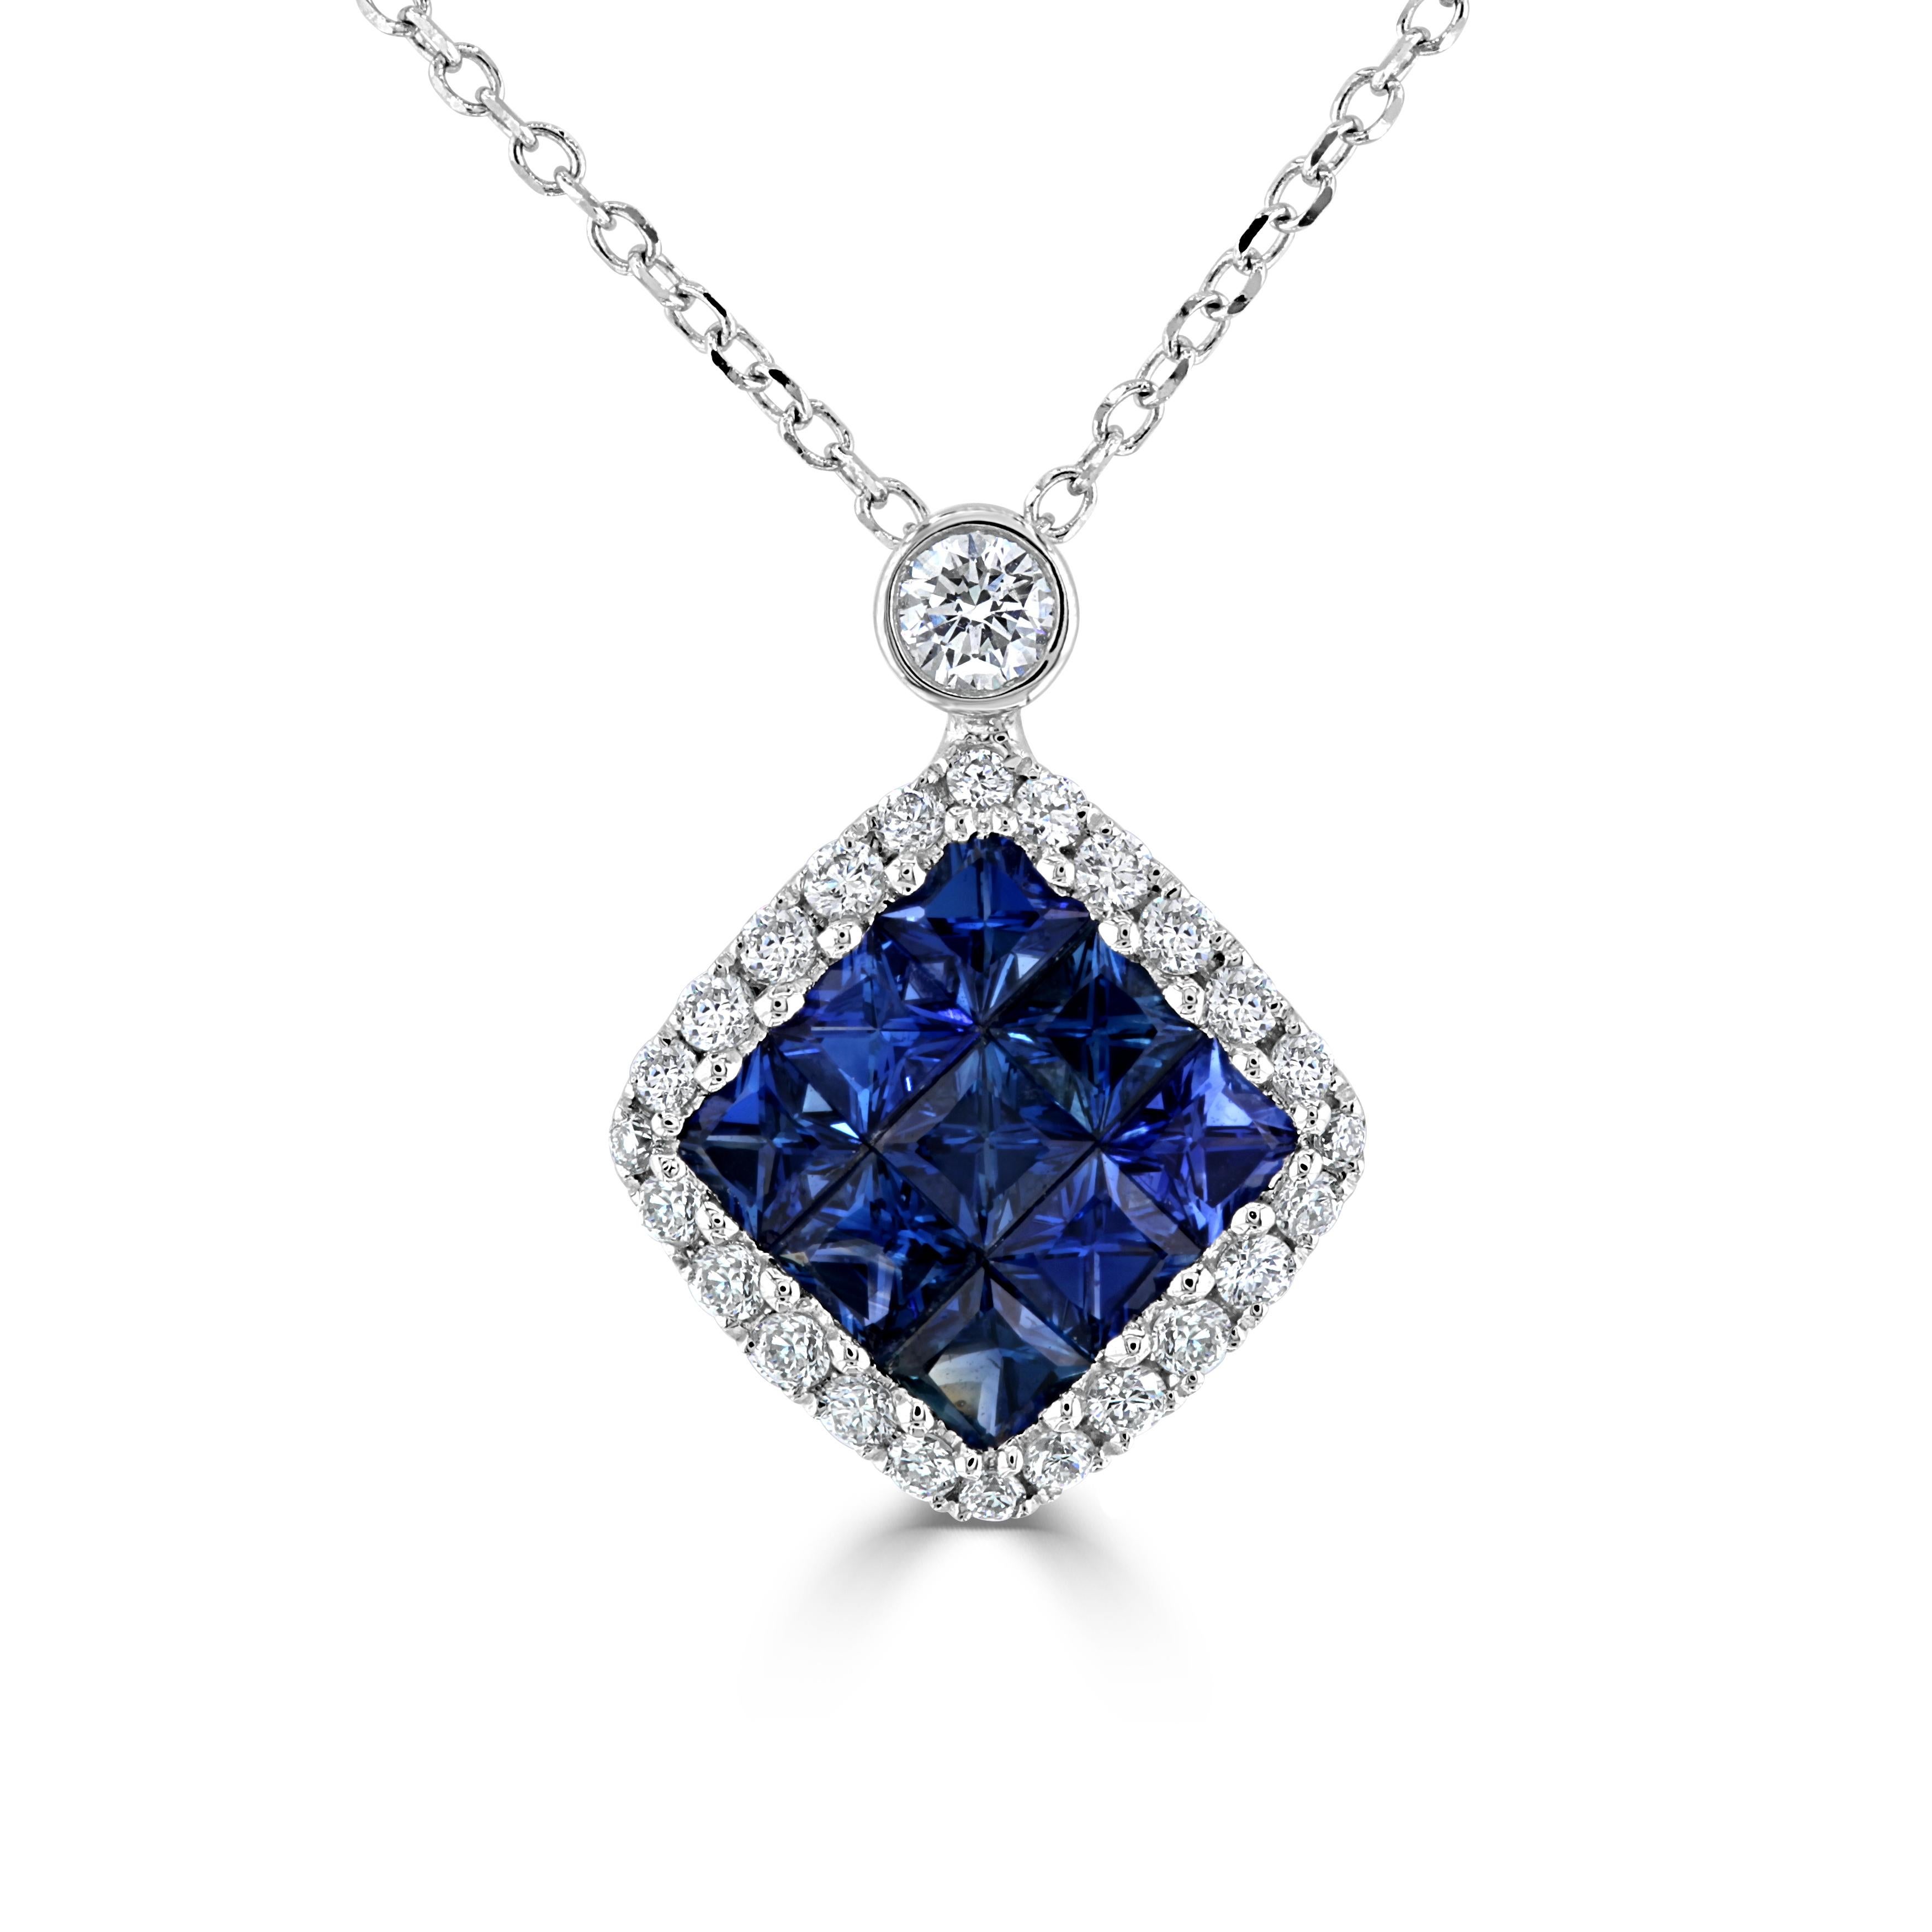 0.74 Carat Blue Sapphire and 0.21 Carat Diamond Pendant in 18k White ref1461 For Sale 1